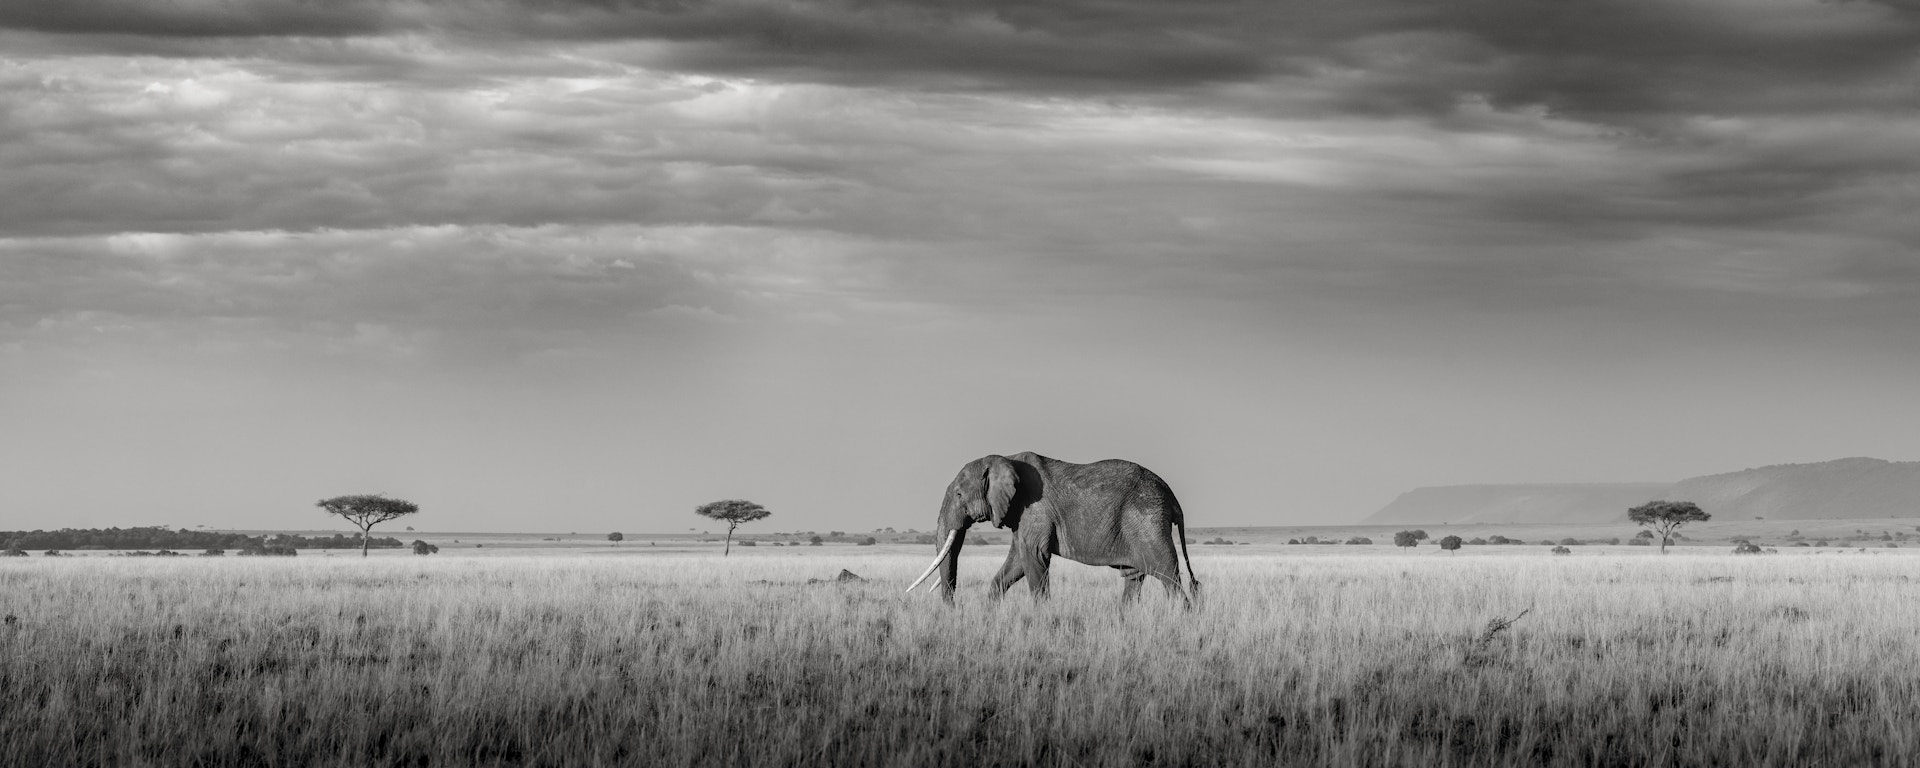 Maasai Mara African Wildlife Photography Prints Limited Edition Fine Art in Kenya Africa 35